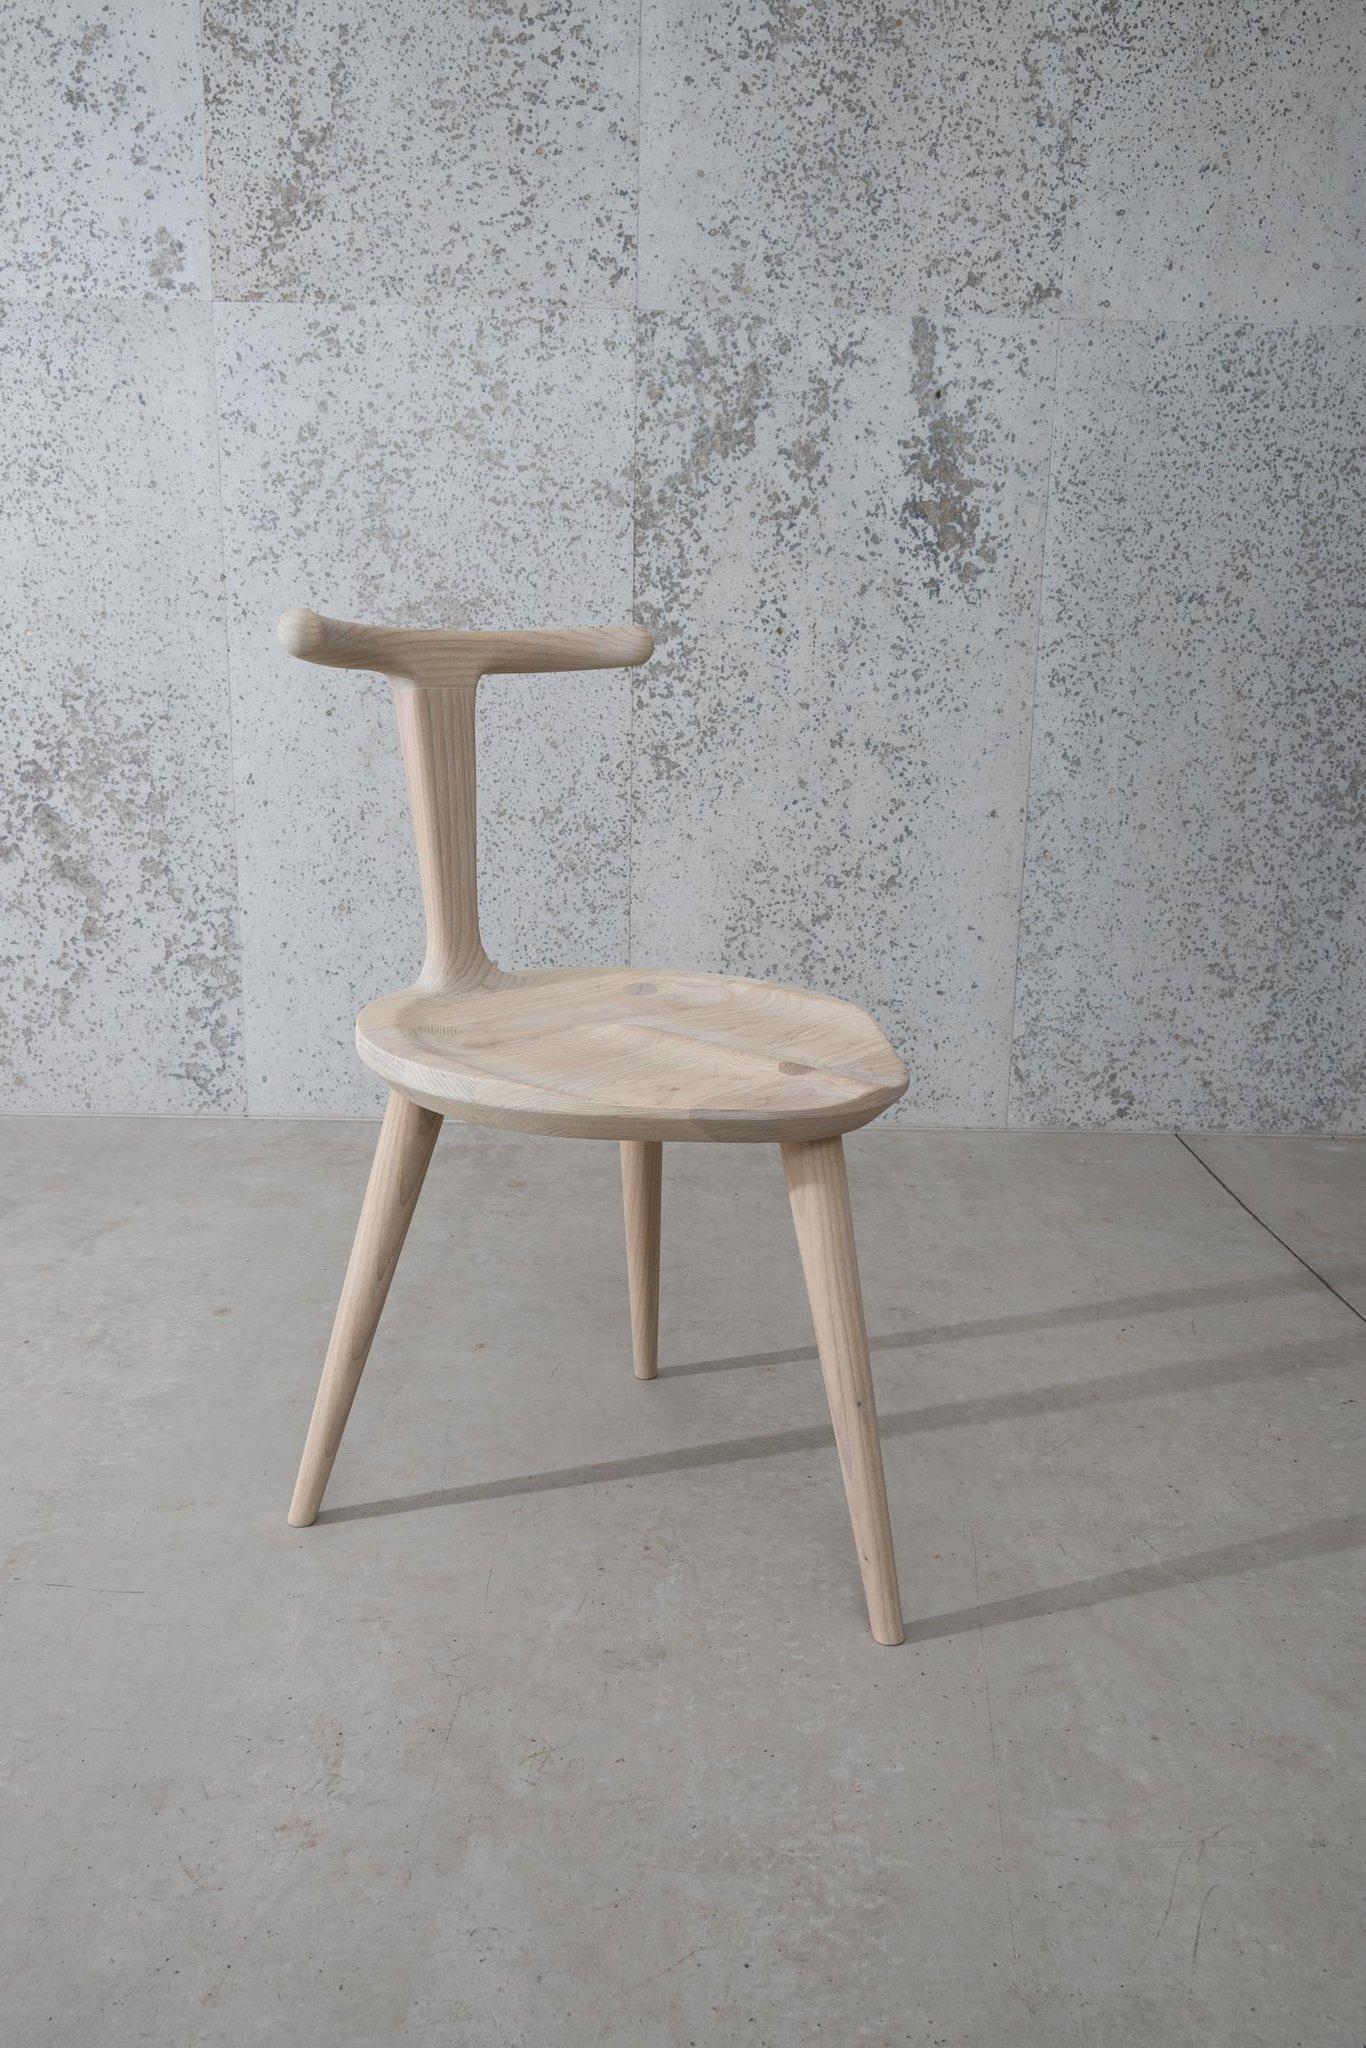 Chaise 3 pieds en frêne blanc oxbend par Fernweh Woodworking
Dimensions : Siège : L 17